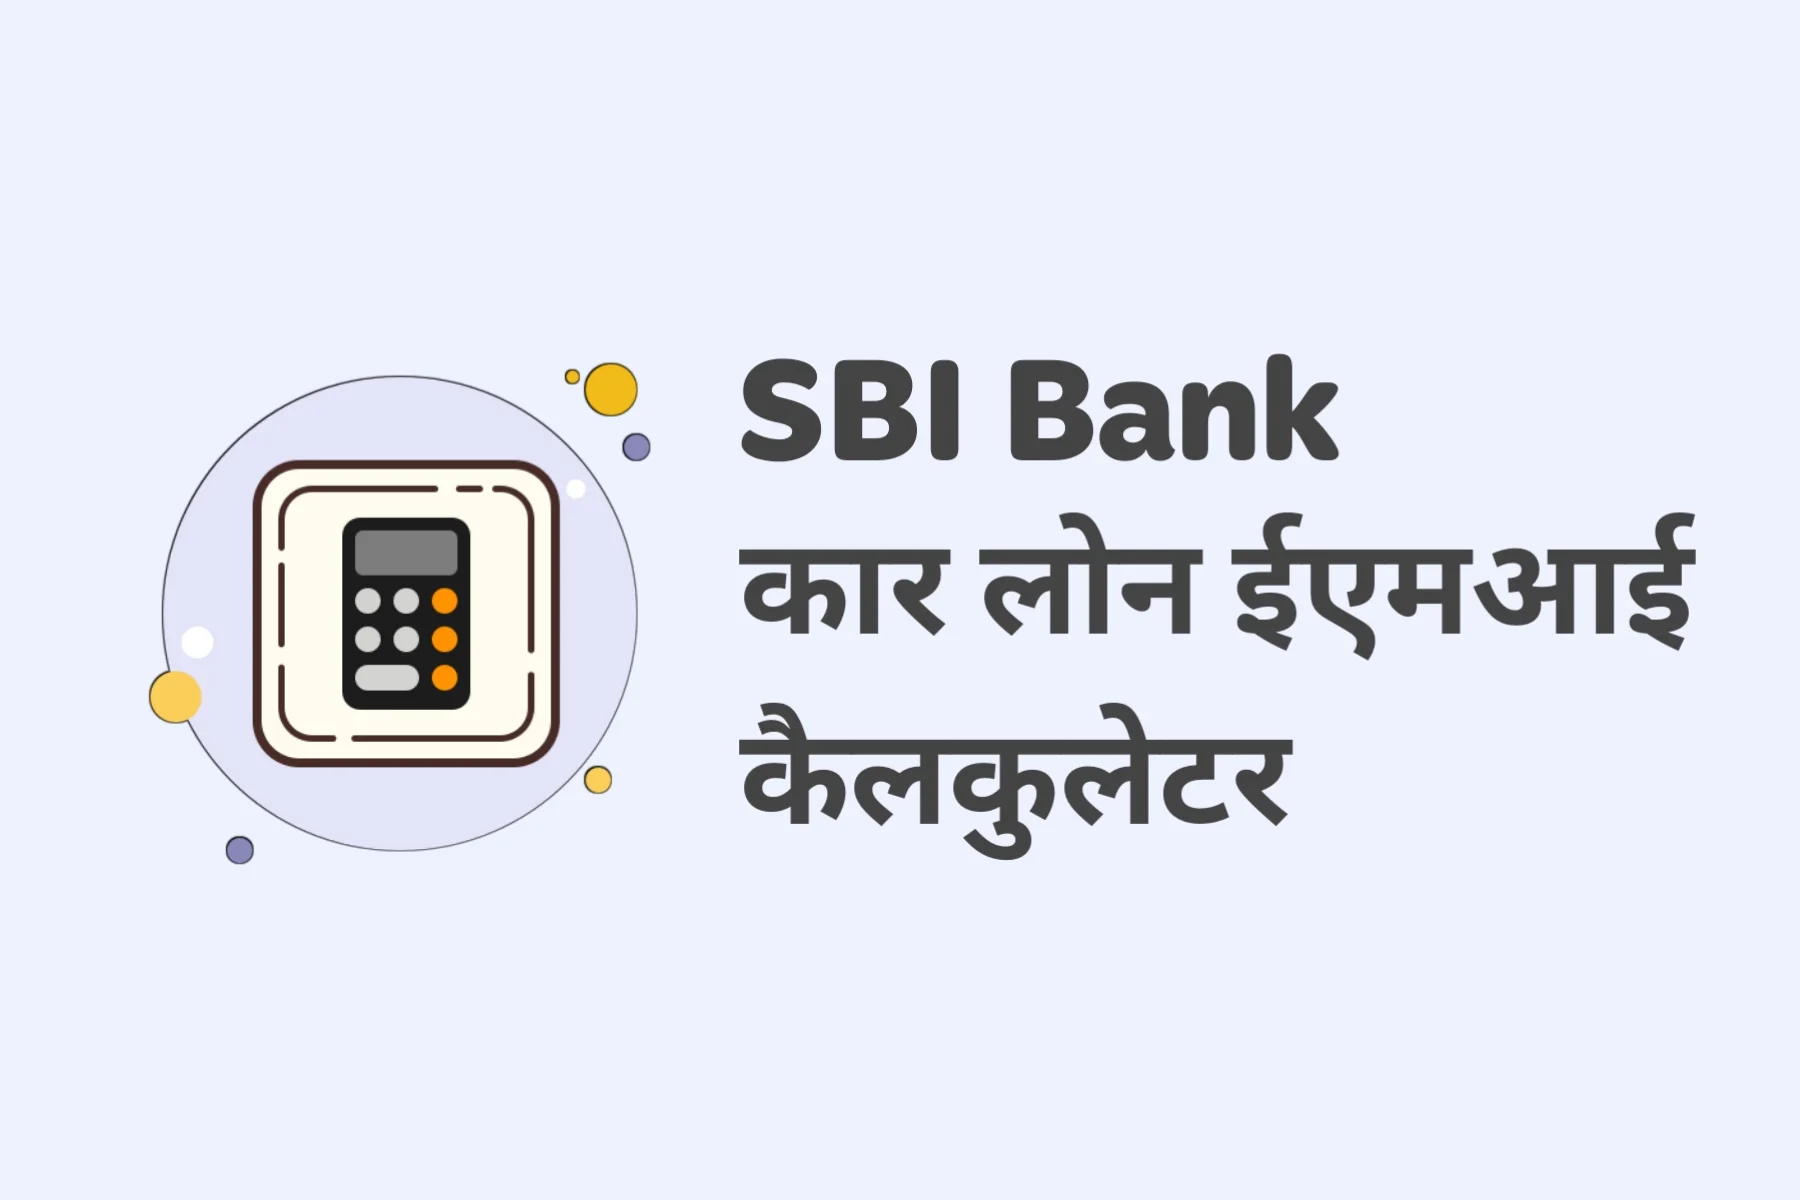 sbi bank car loan emi calculate in hindi